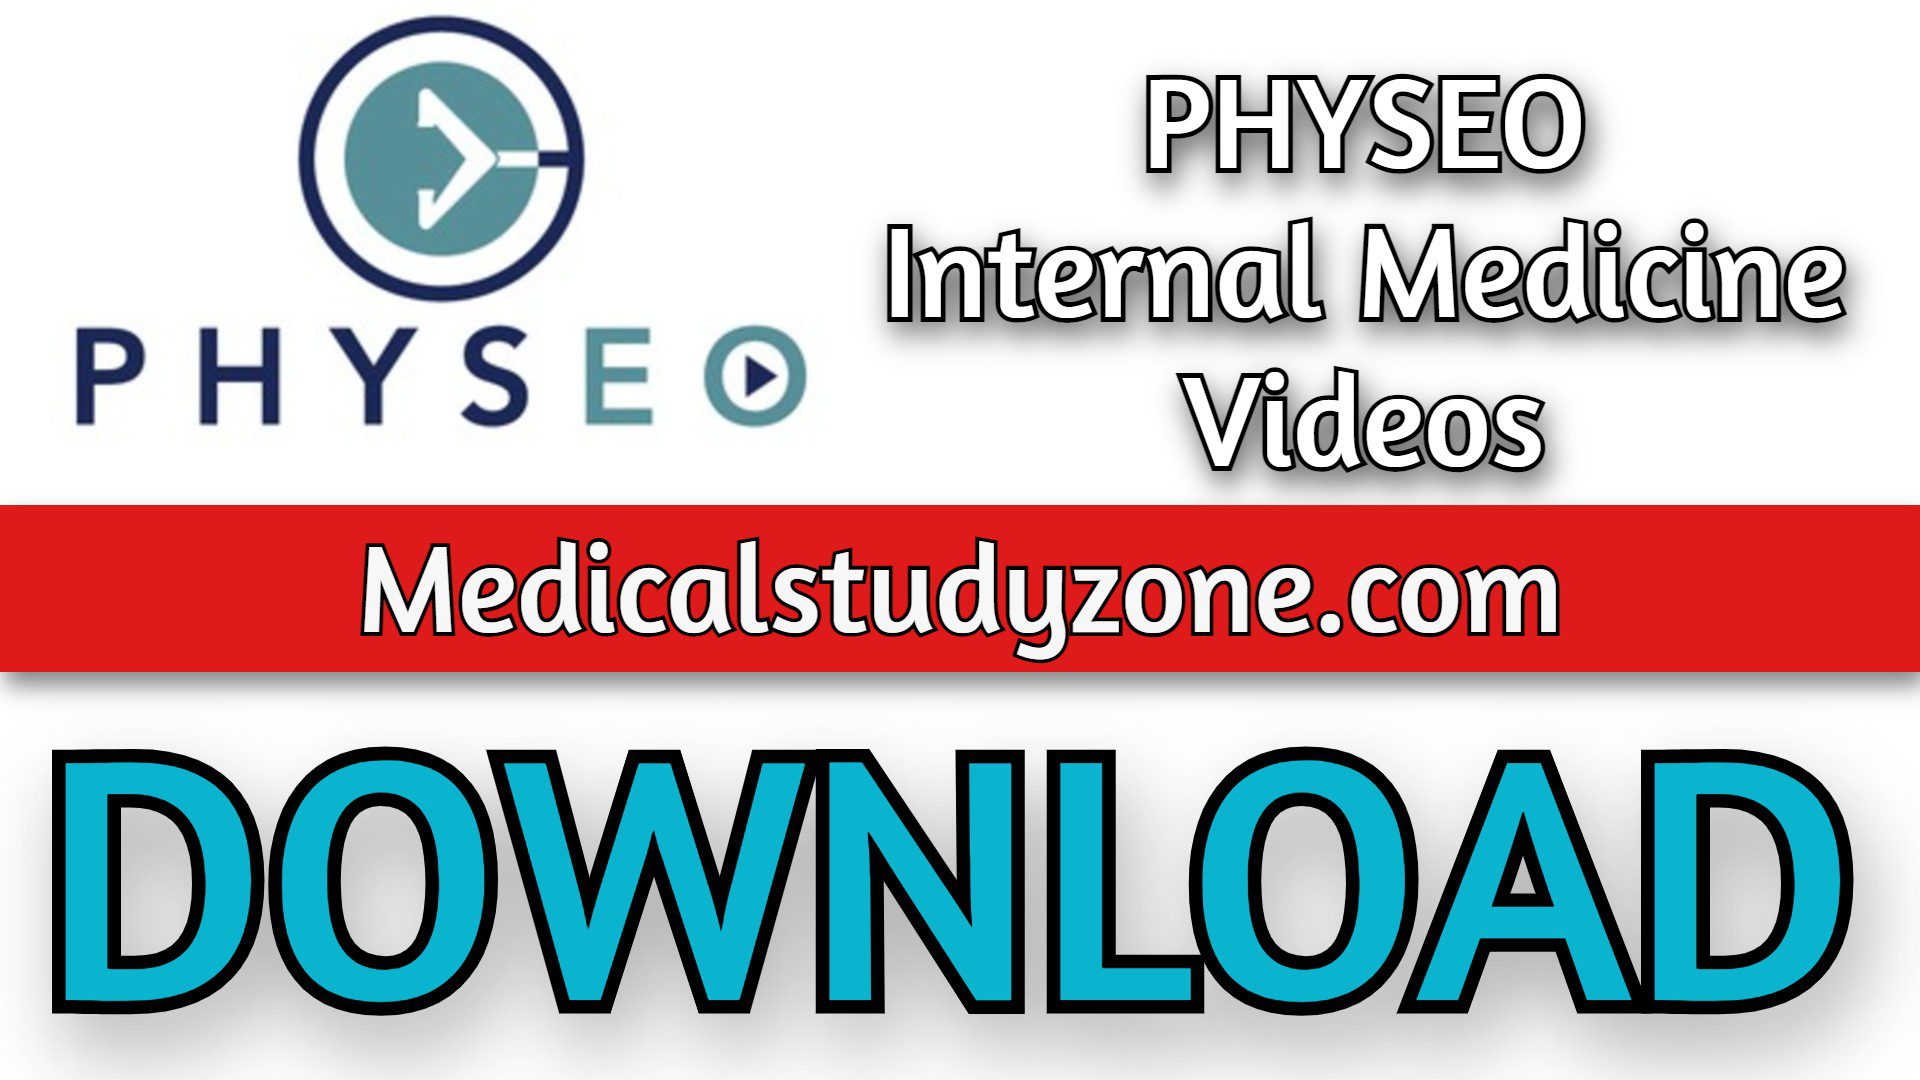 PHYSEO Internal Medicine Videos 2022 Free Download